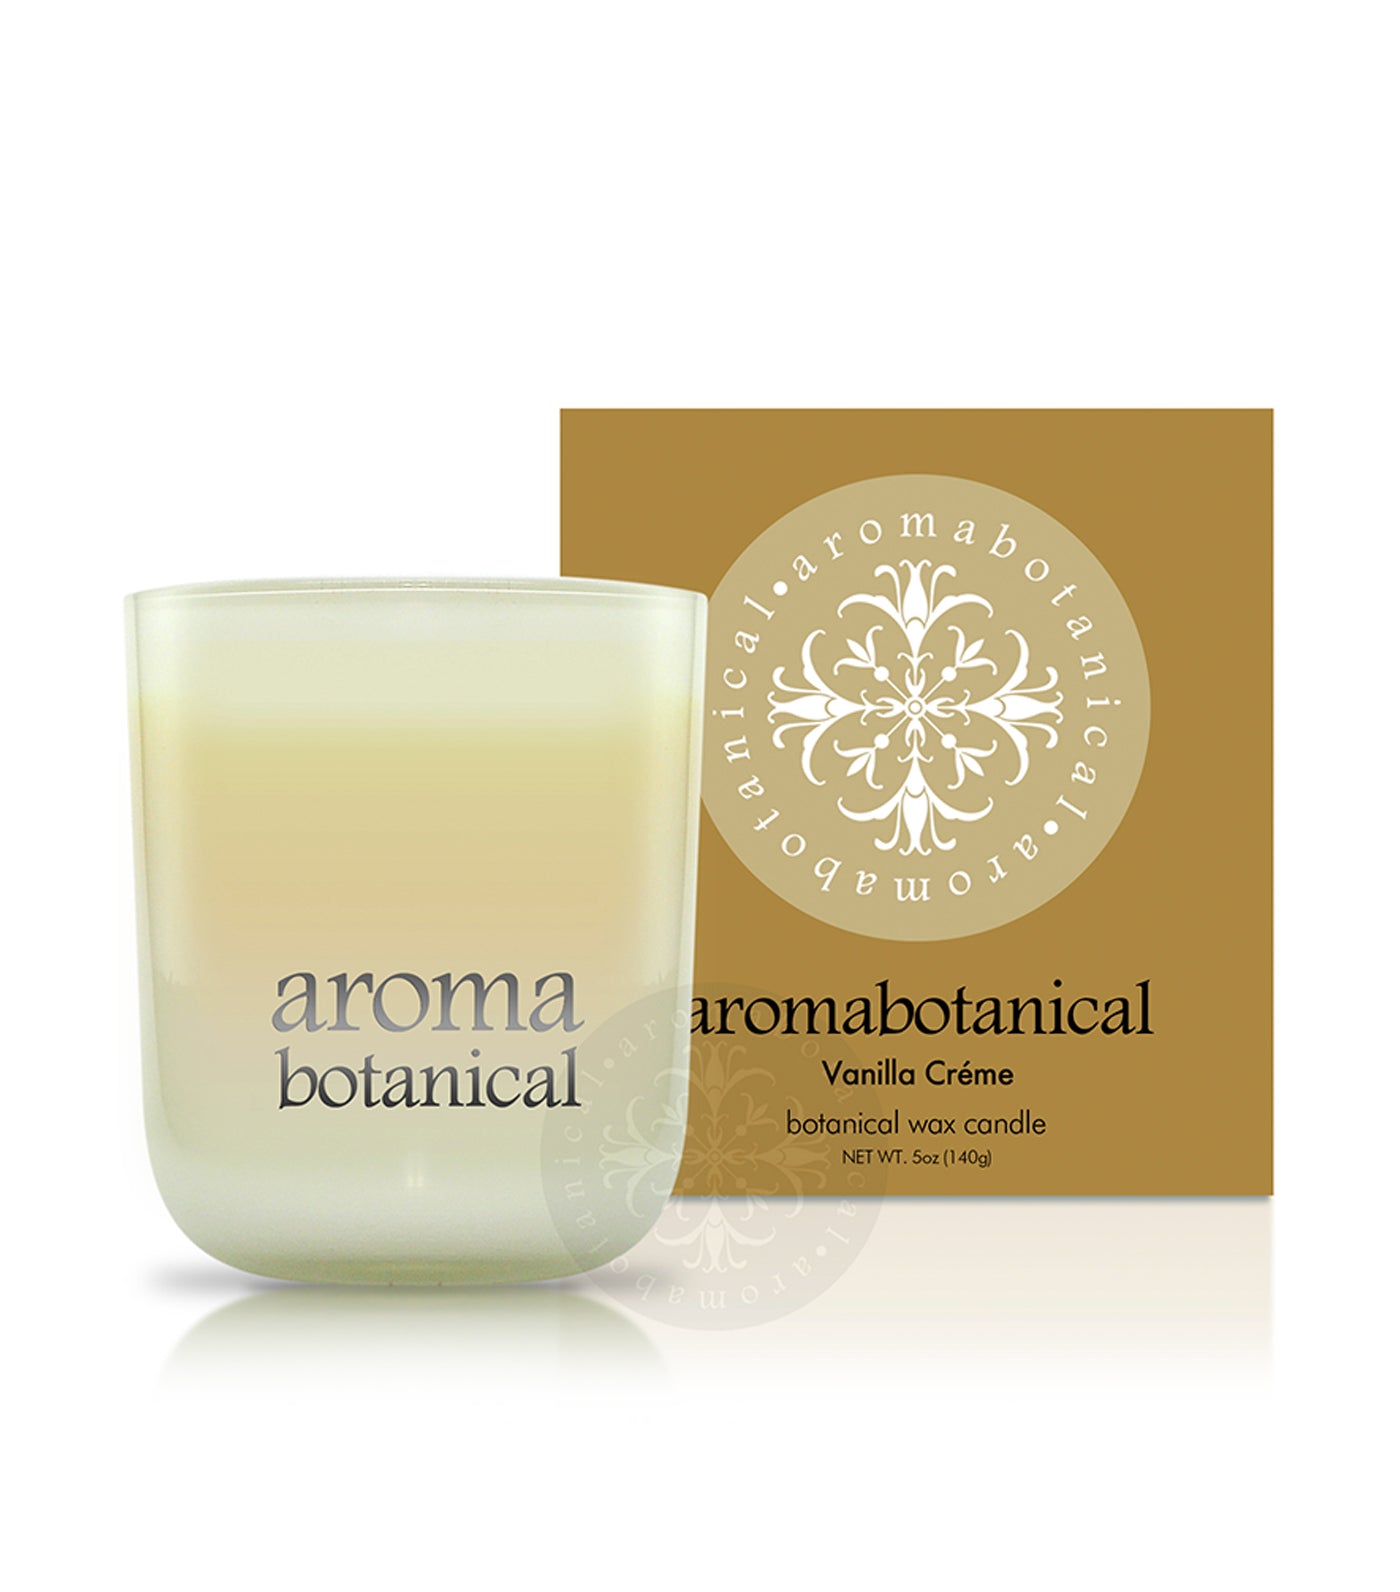 aromabotanical vanilla crème 140g candle